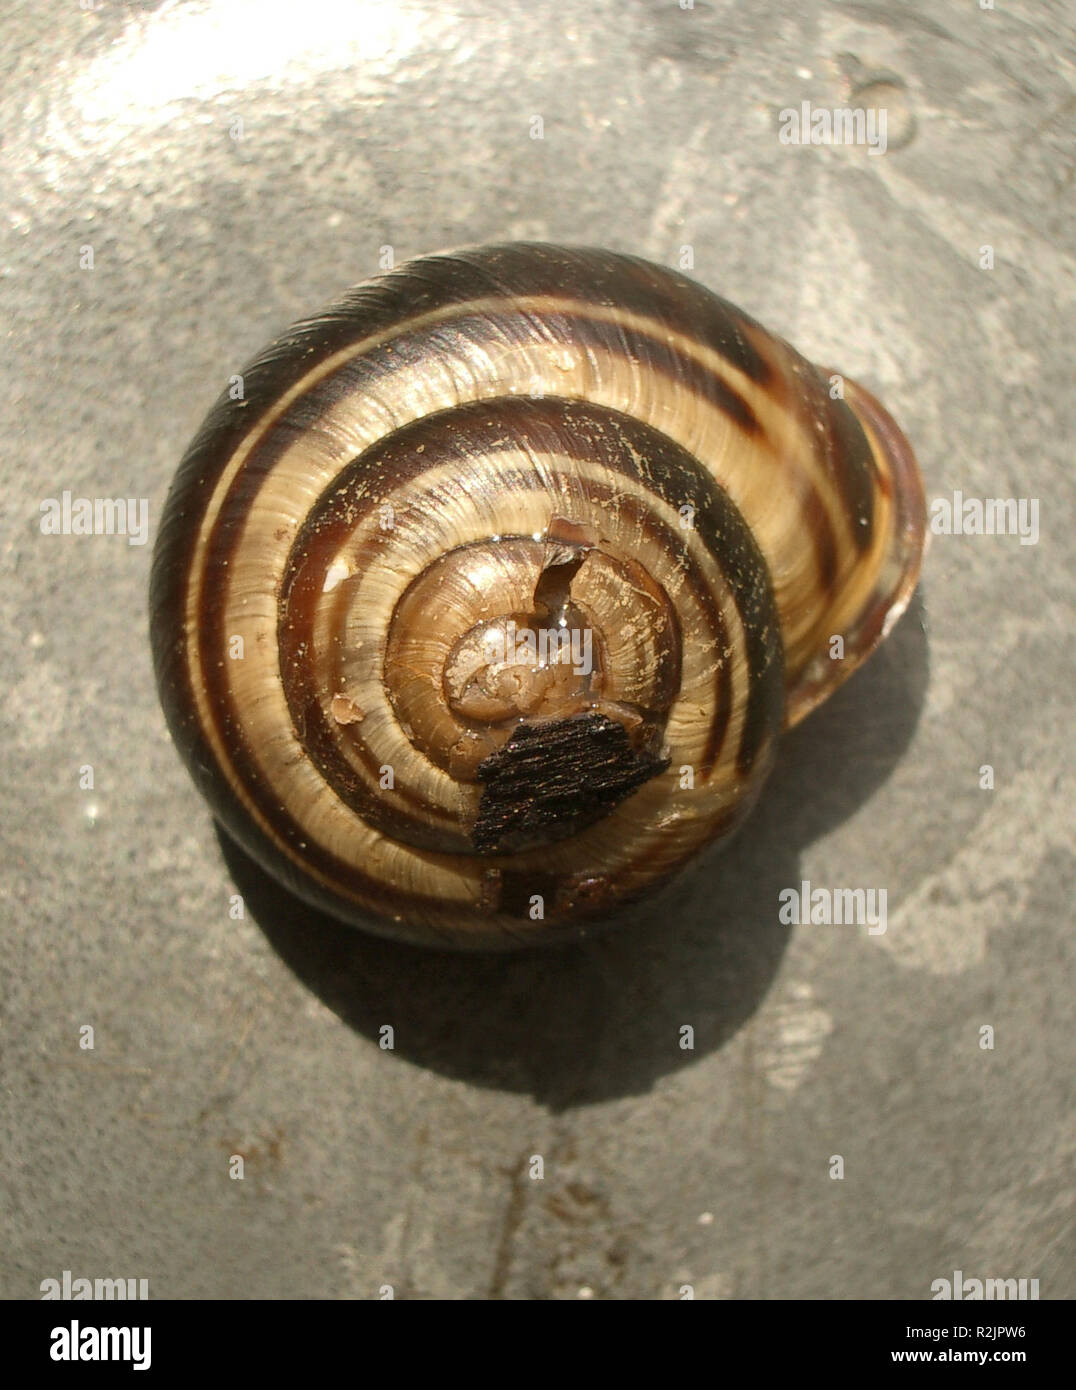 snail-injury-1472 Stock Photo